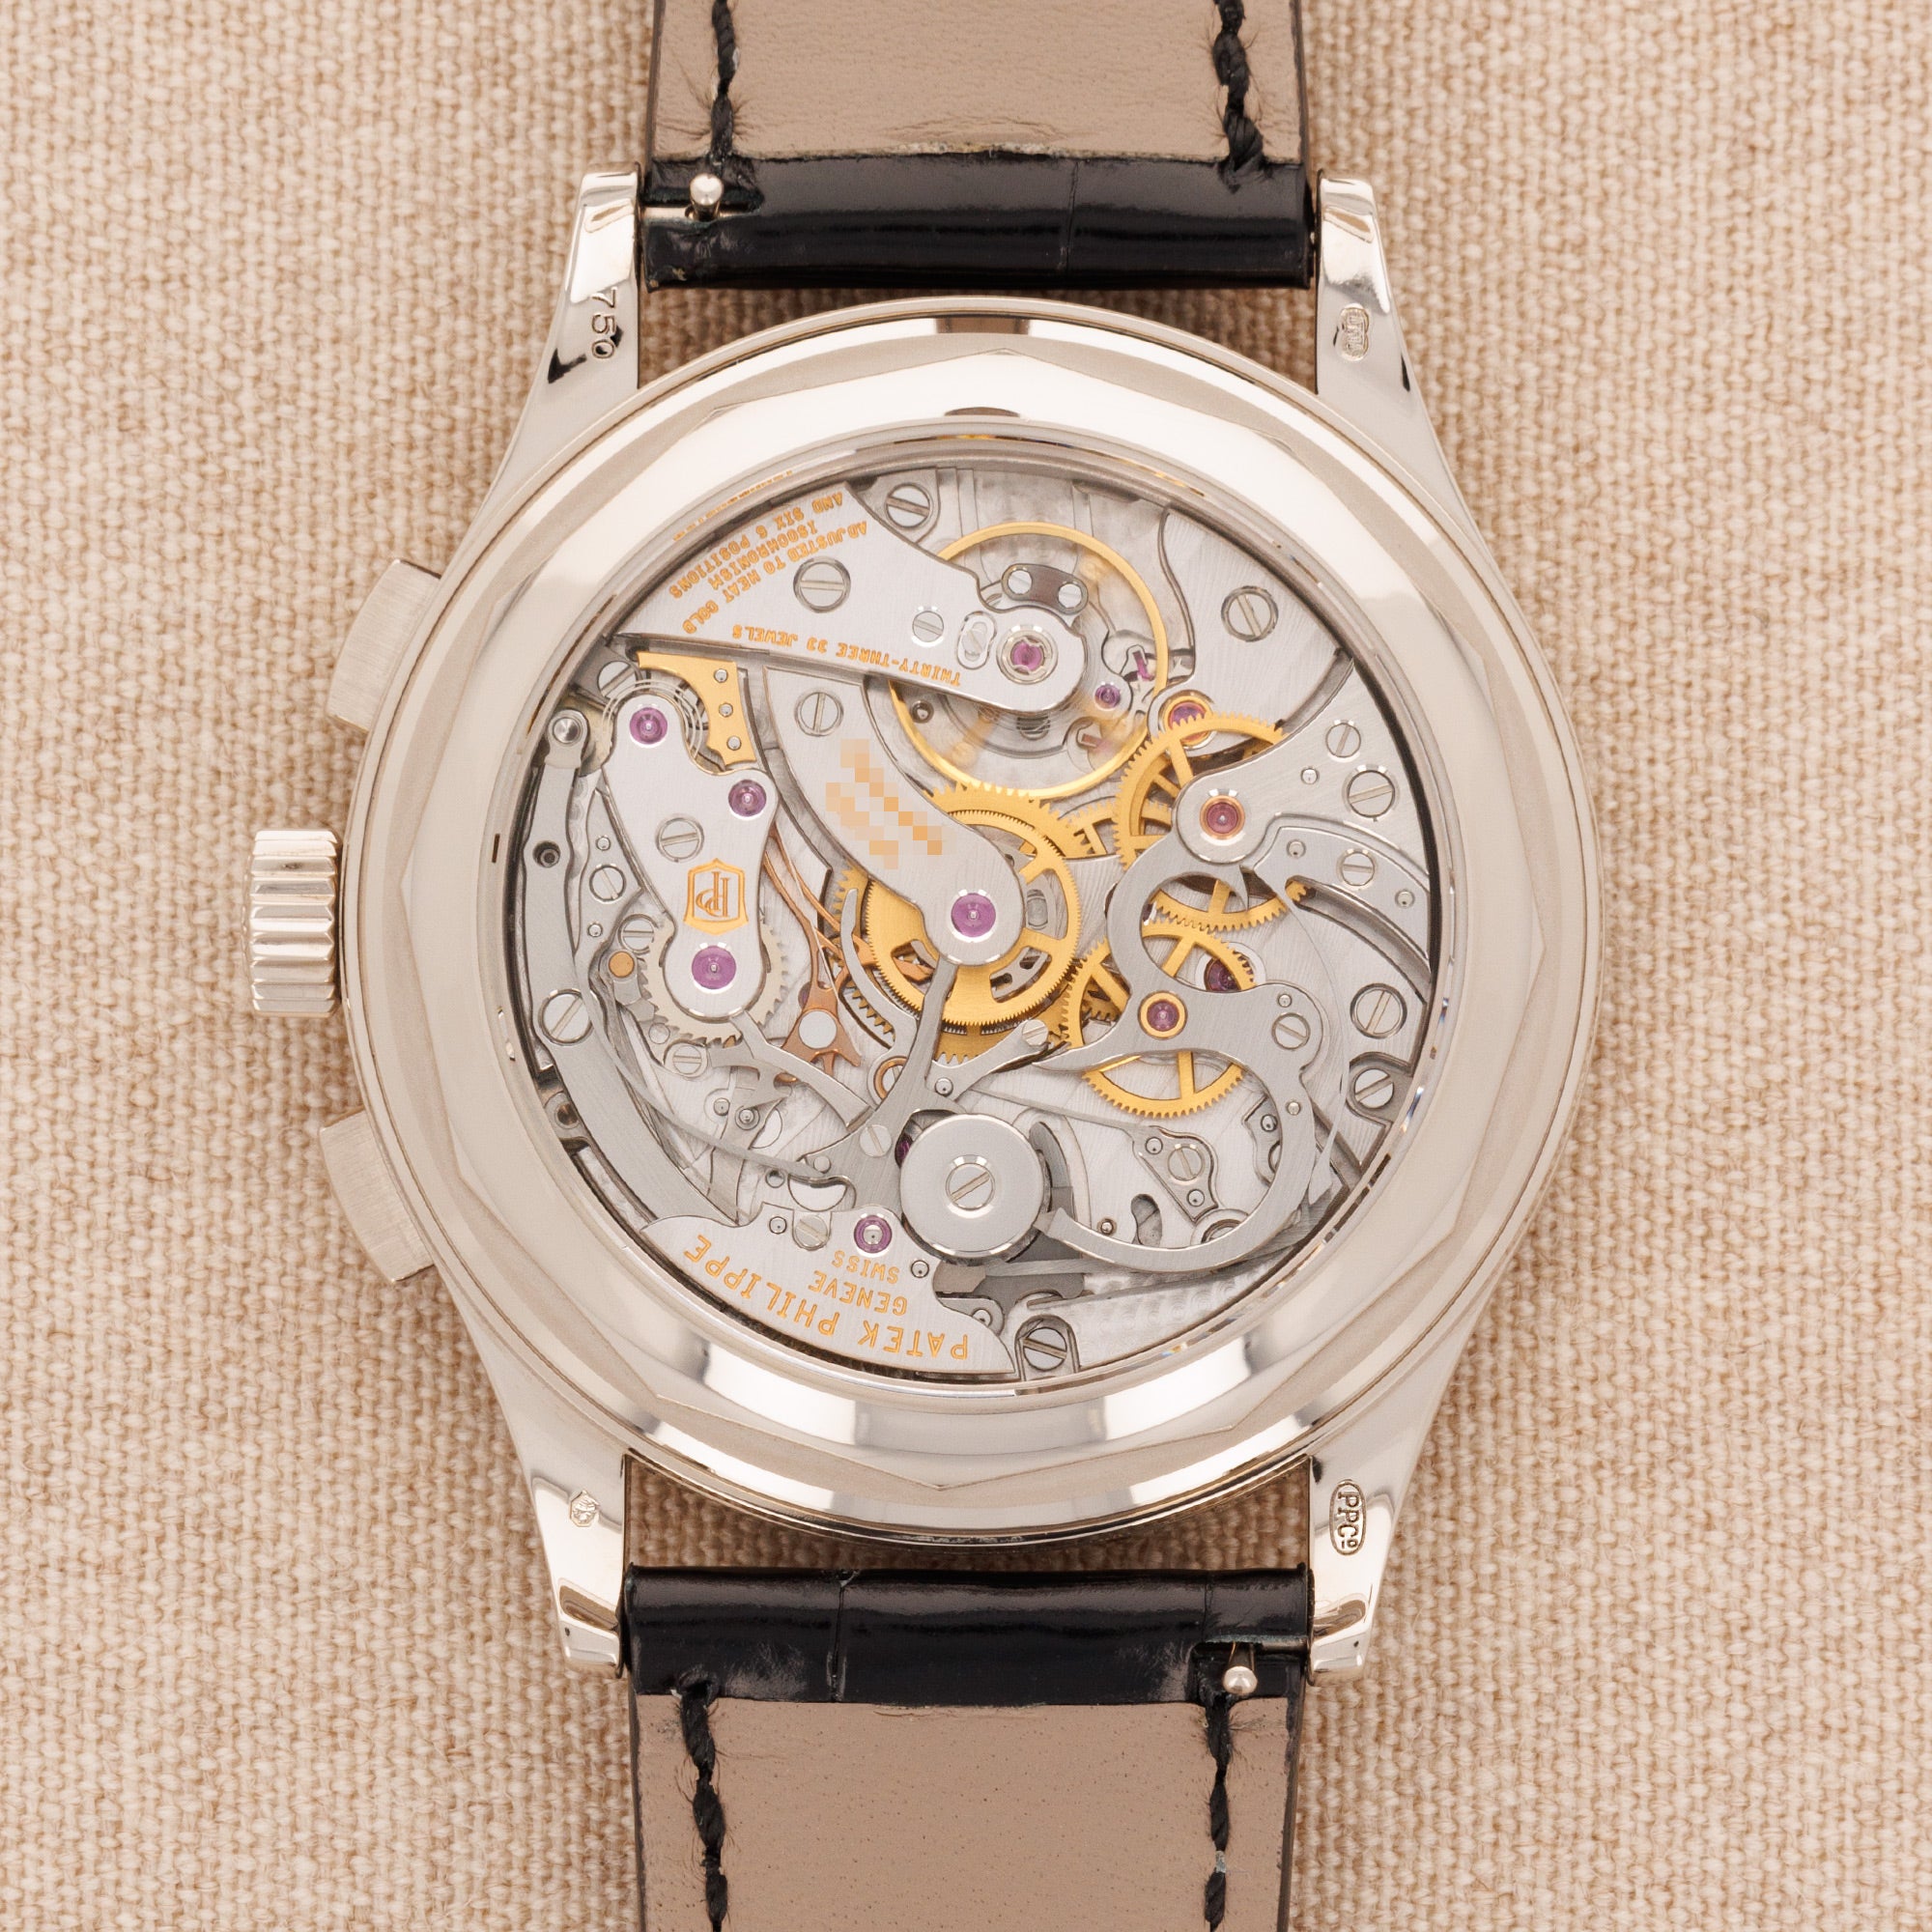 Patek Philippe - Patek Philippe White Gold Chronograph Ref. 5170G - The Keystone Watches